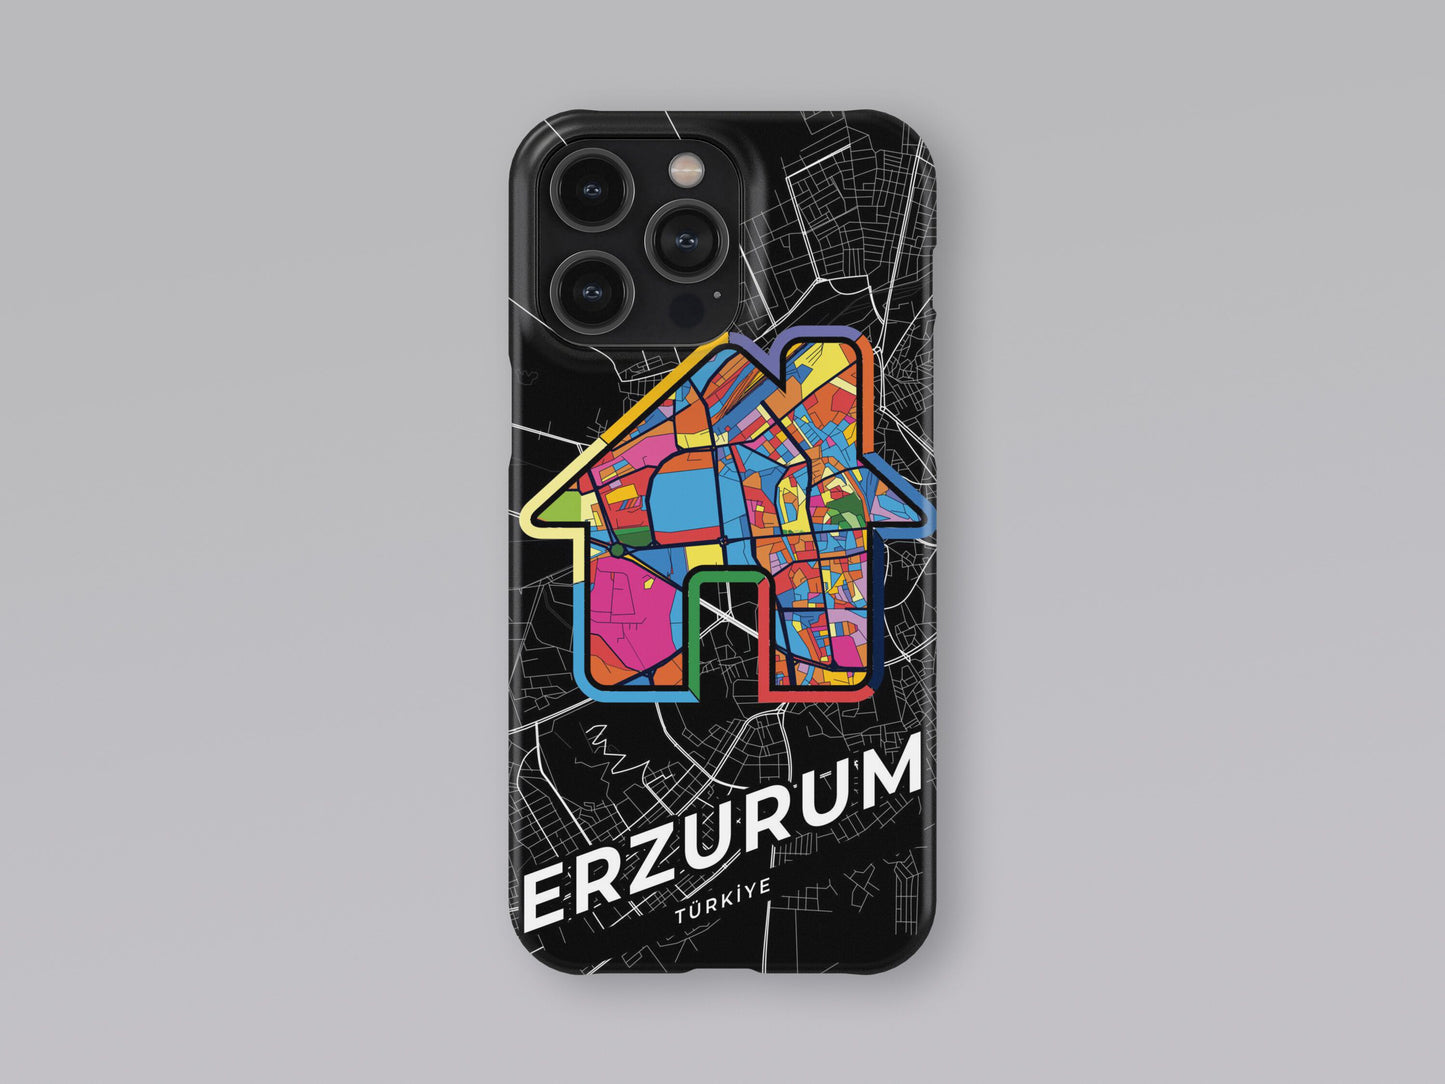 Erzurum Turkey slim phone case with colorful icon. Birthday, wedding or housewarming gift. Couple match cases. 3